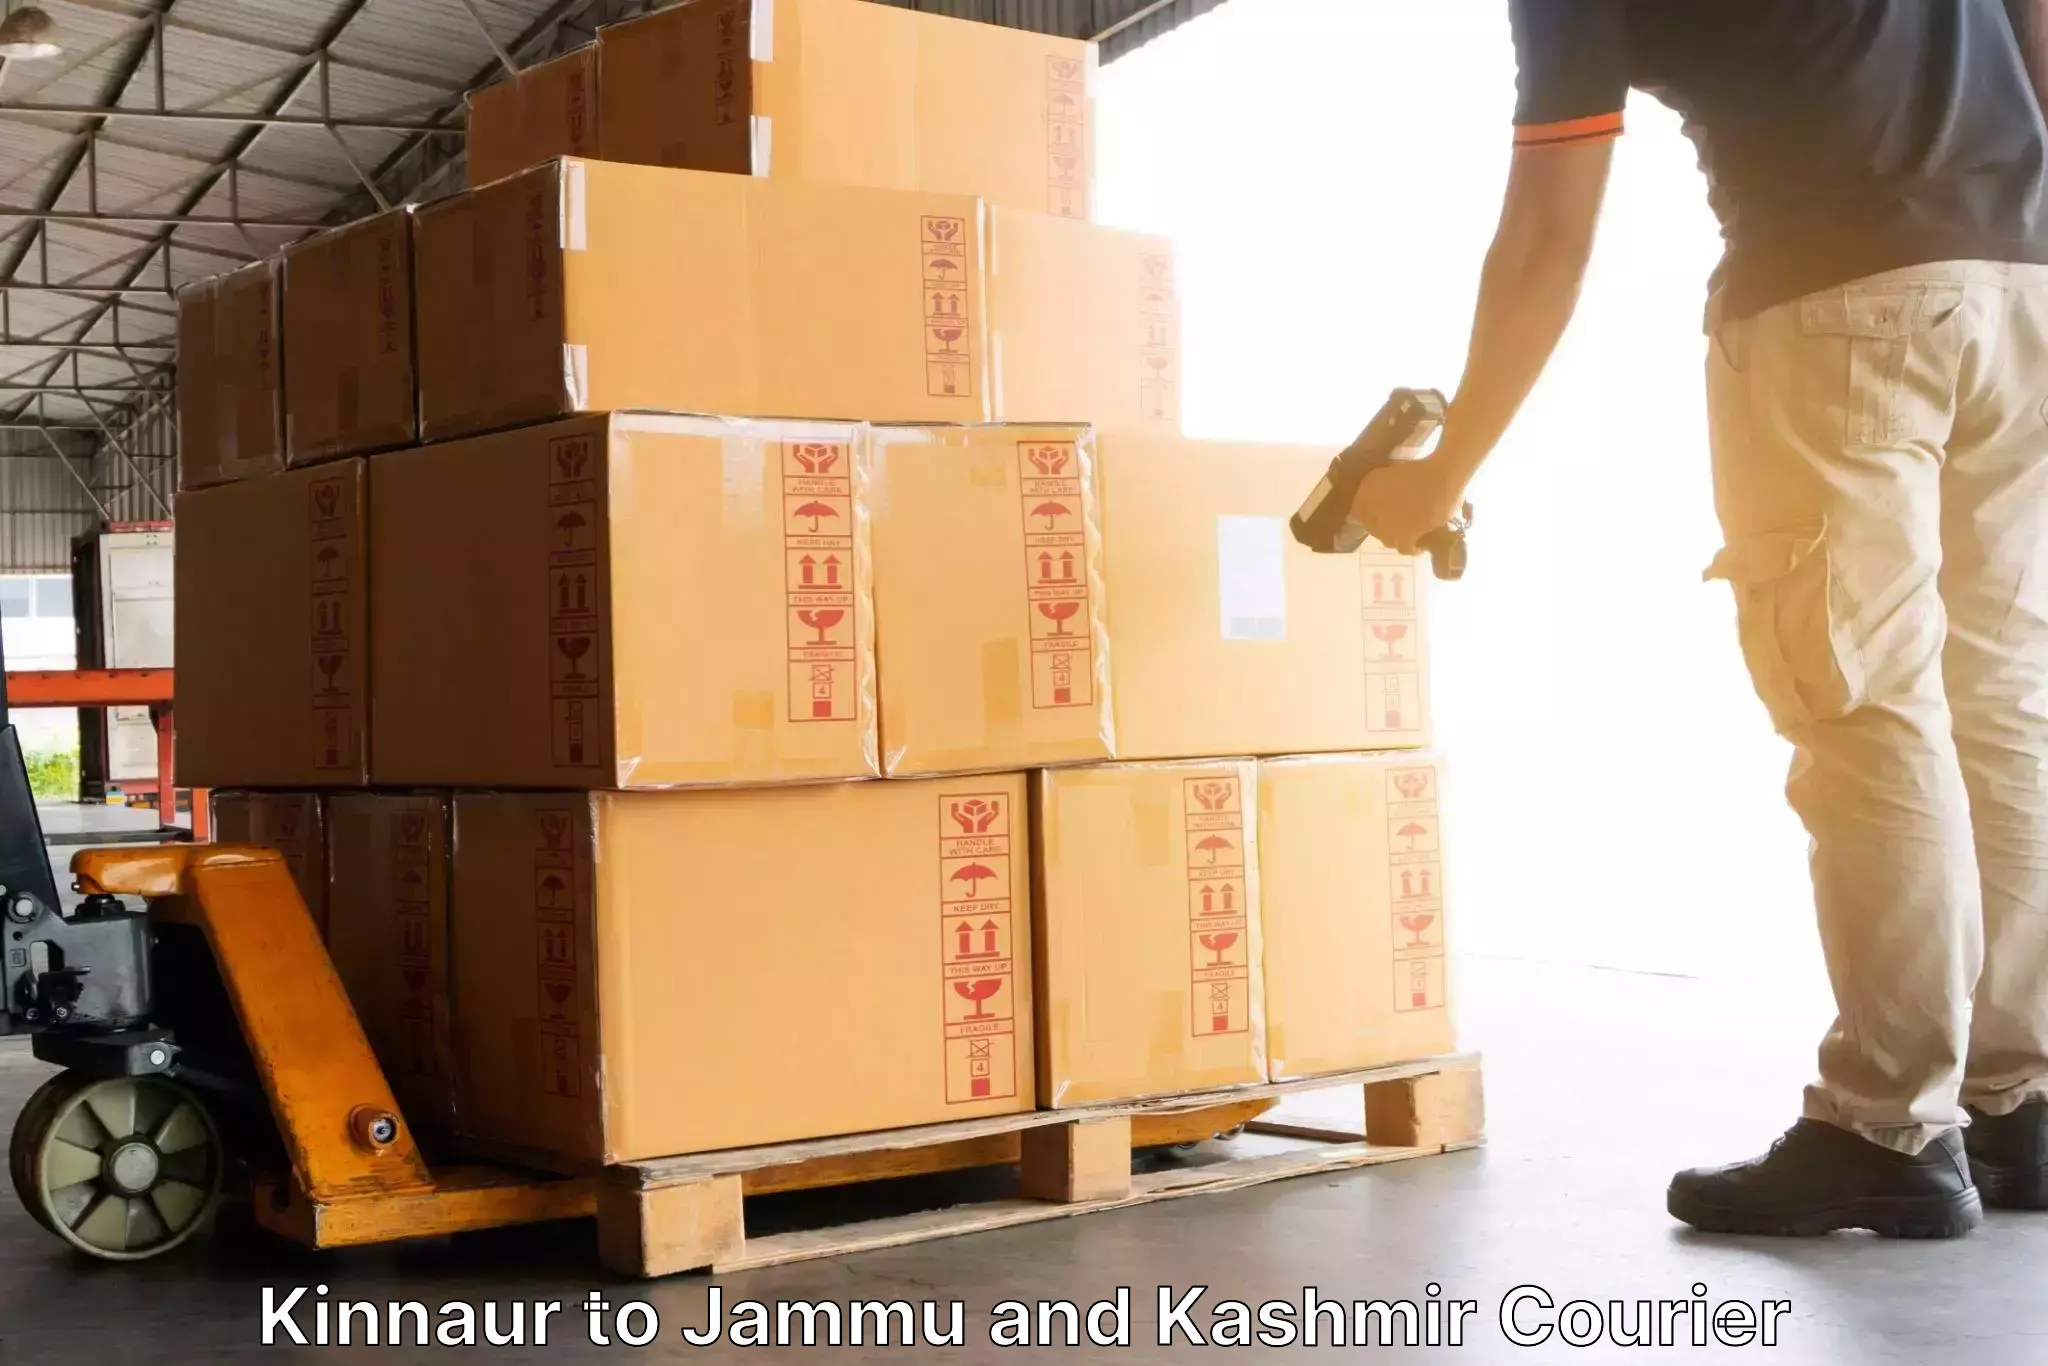 Express mail solutions Kinnaur to Bandipur